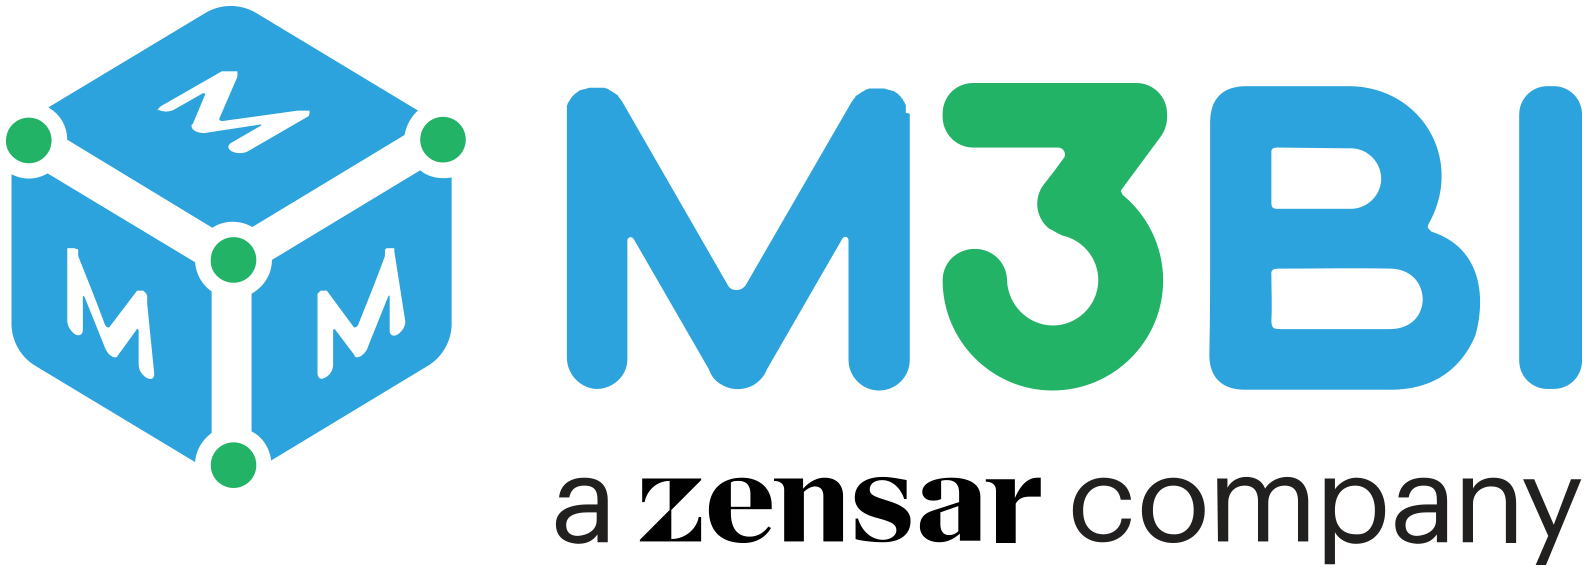 m3bi-logo